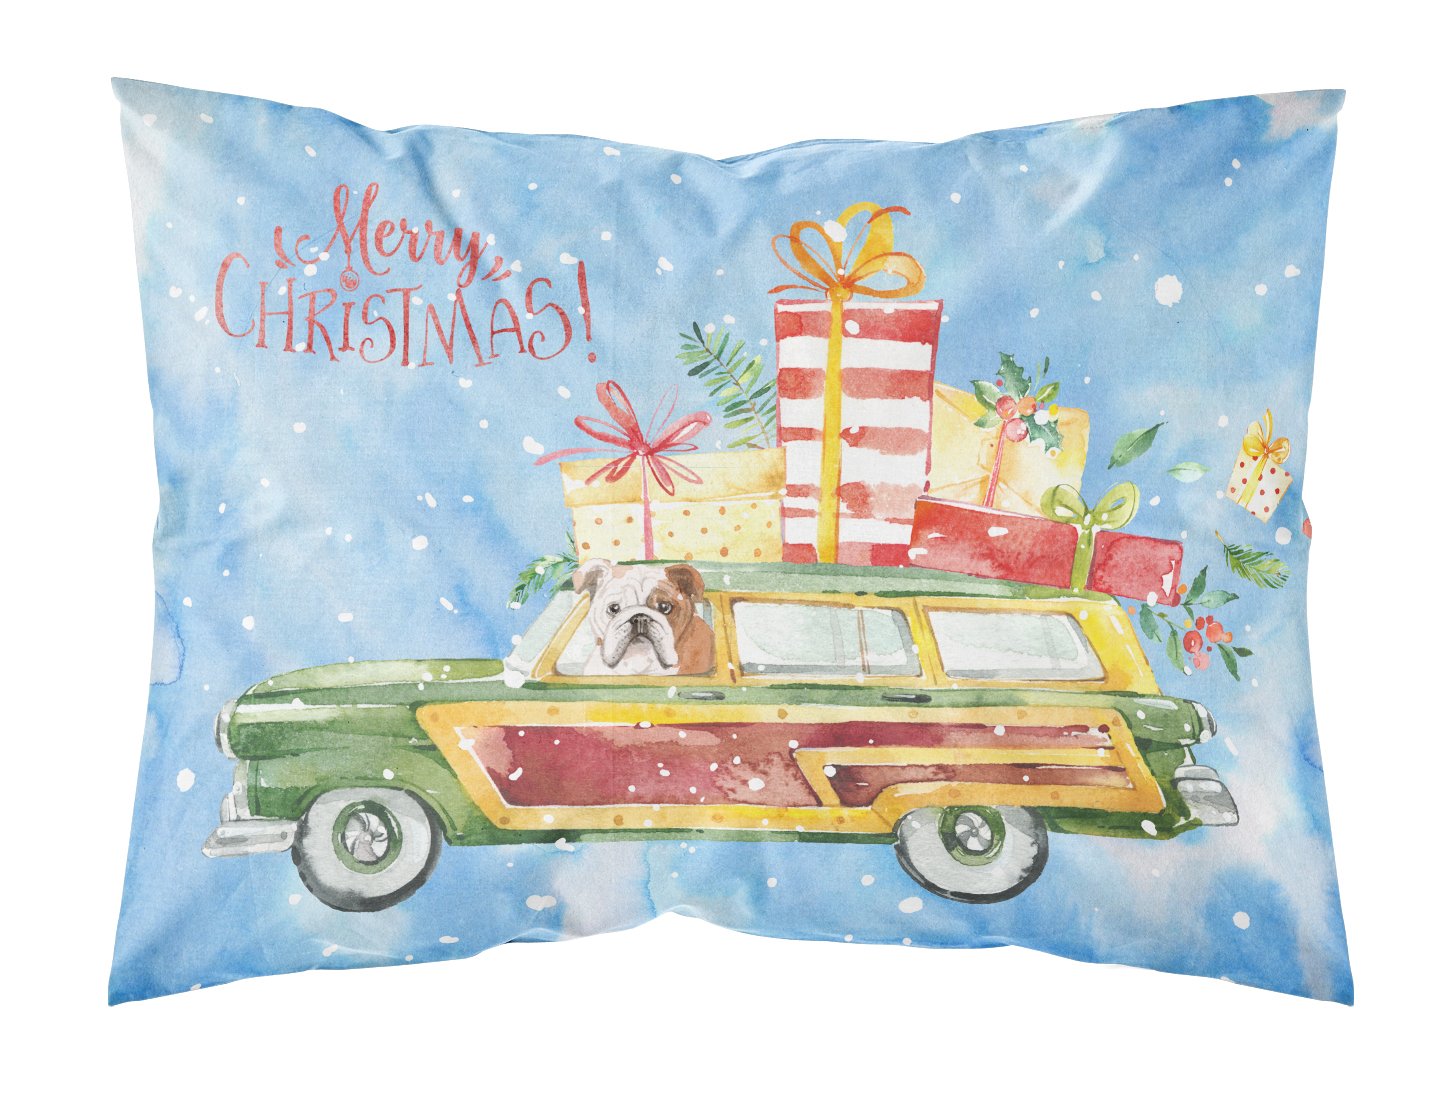 Merry Christmas English Bulldog Fabric Standard Pillowcase CK2453PILLOWCASE by Caroline's Treasures